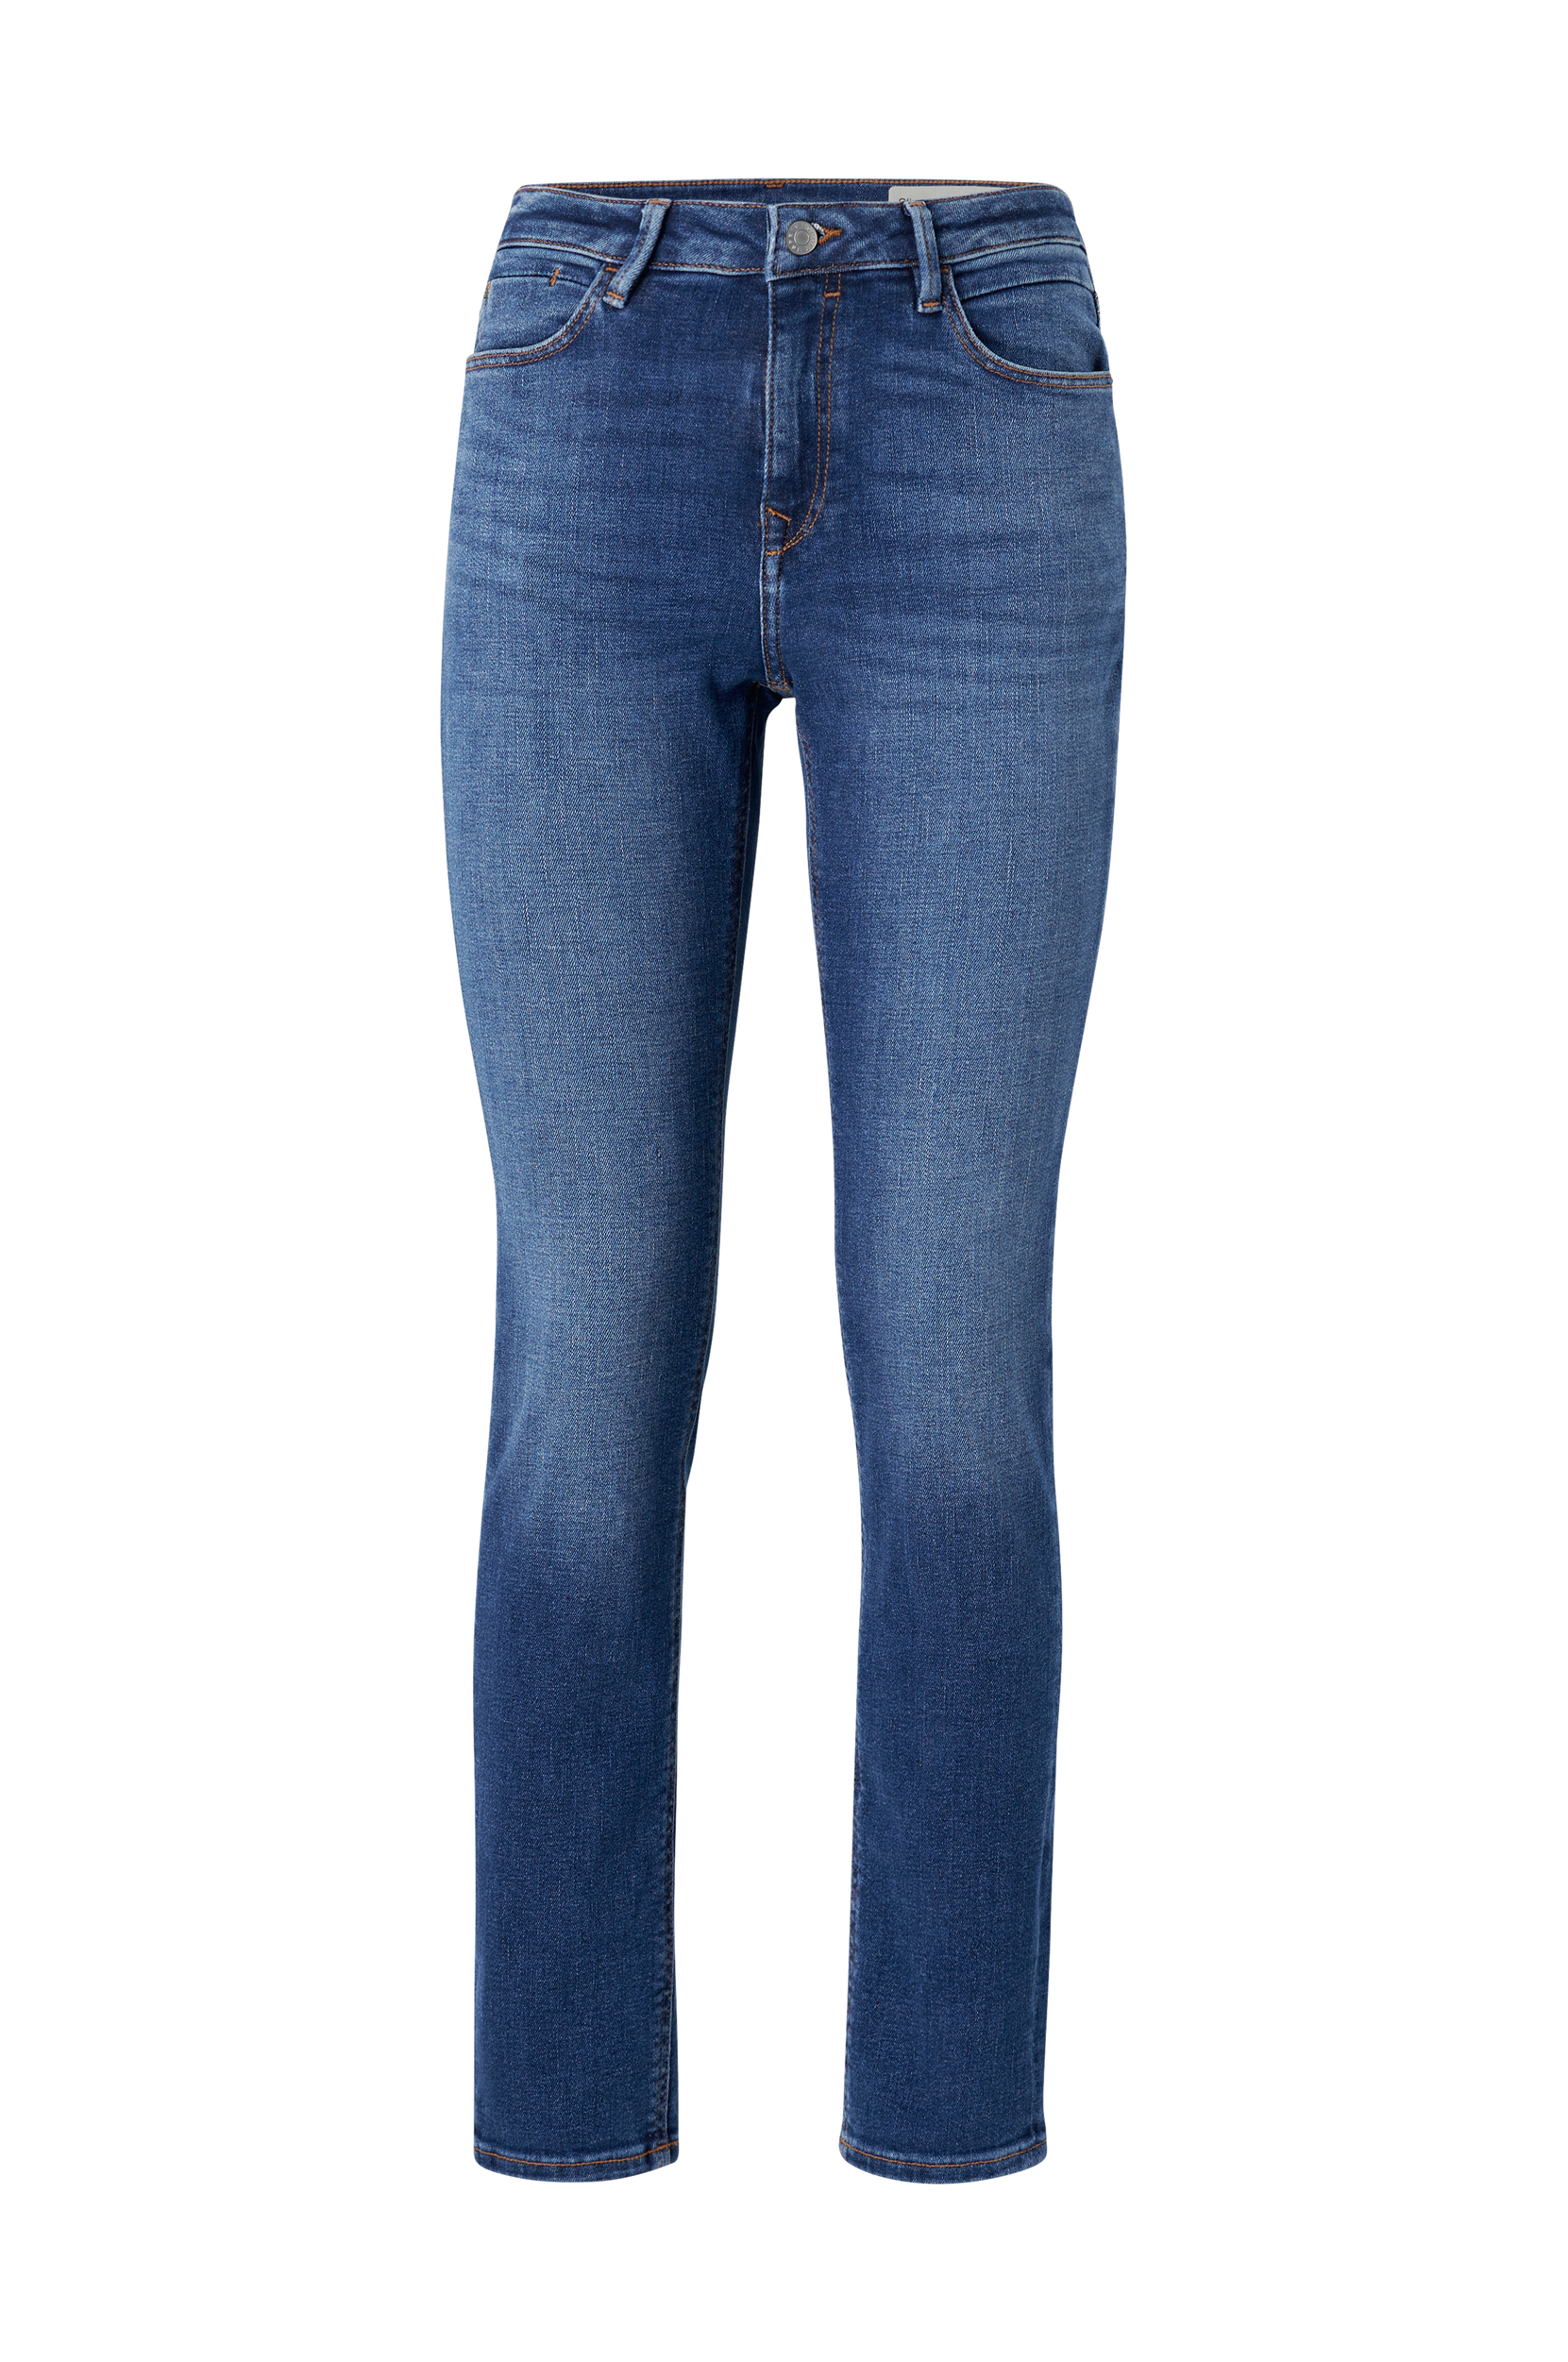 Esprit - Jeans Slim - Blå - W31/L30